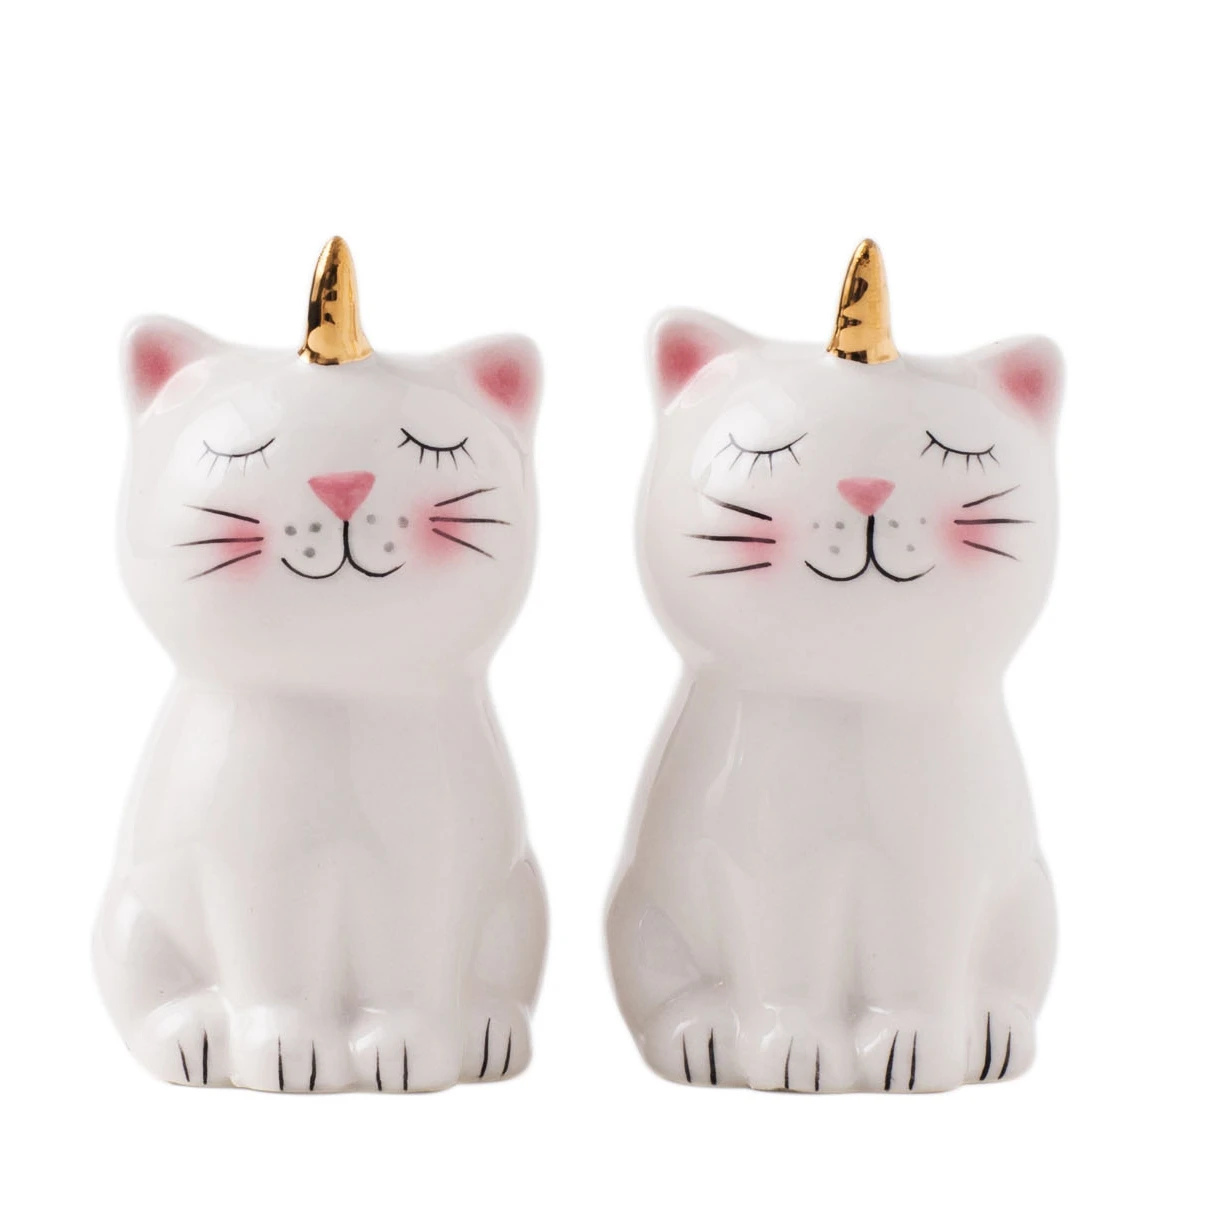 Ceramic Cartoon Cat Ring Holder Jewelry Animal Design Dish Decor Jewelry Tray Cat with Horn Ceramic Jewelry Plate